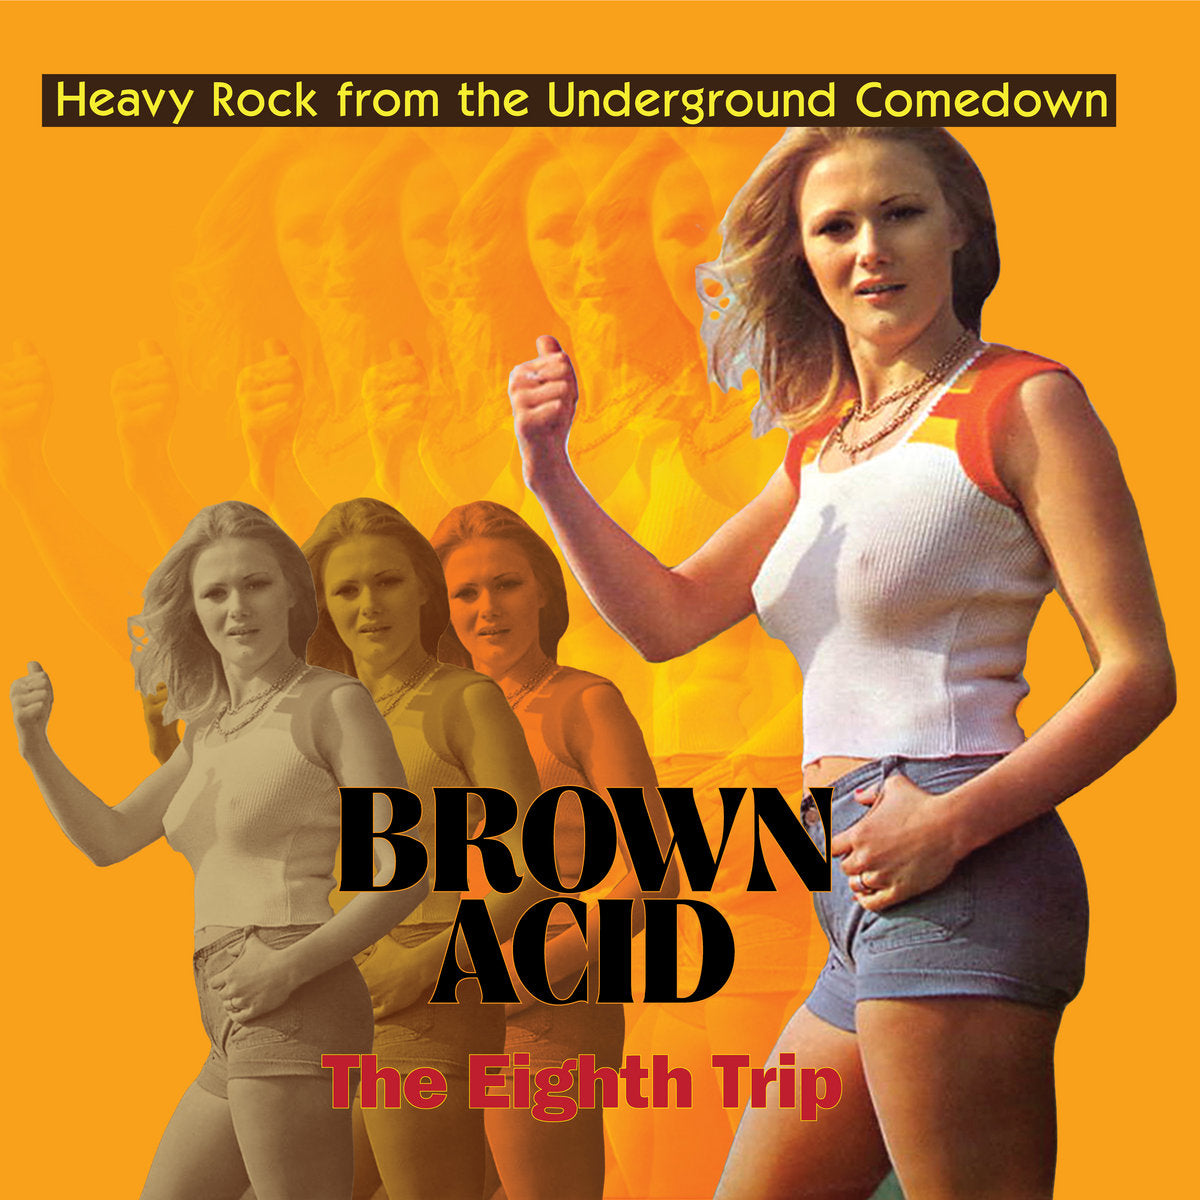 Arcade Sound - Brown Acid 8 - The Eighth Trip LP / CD image